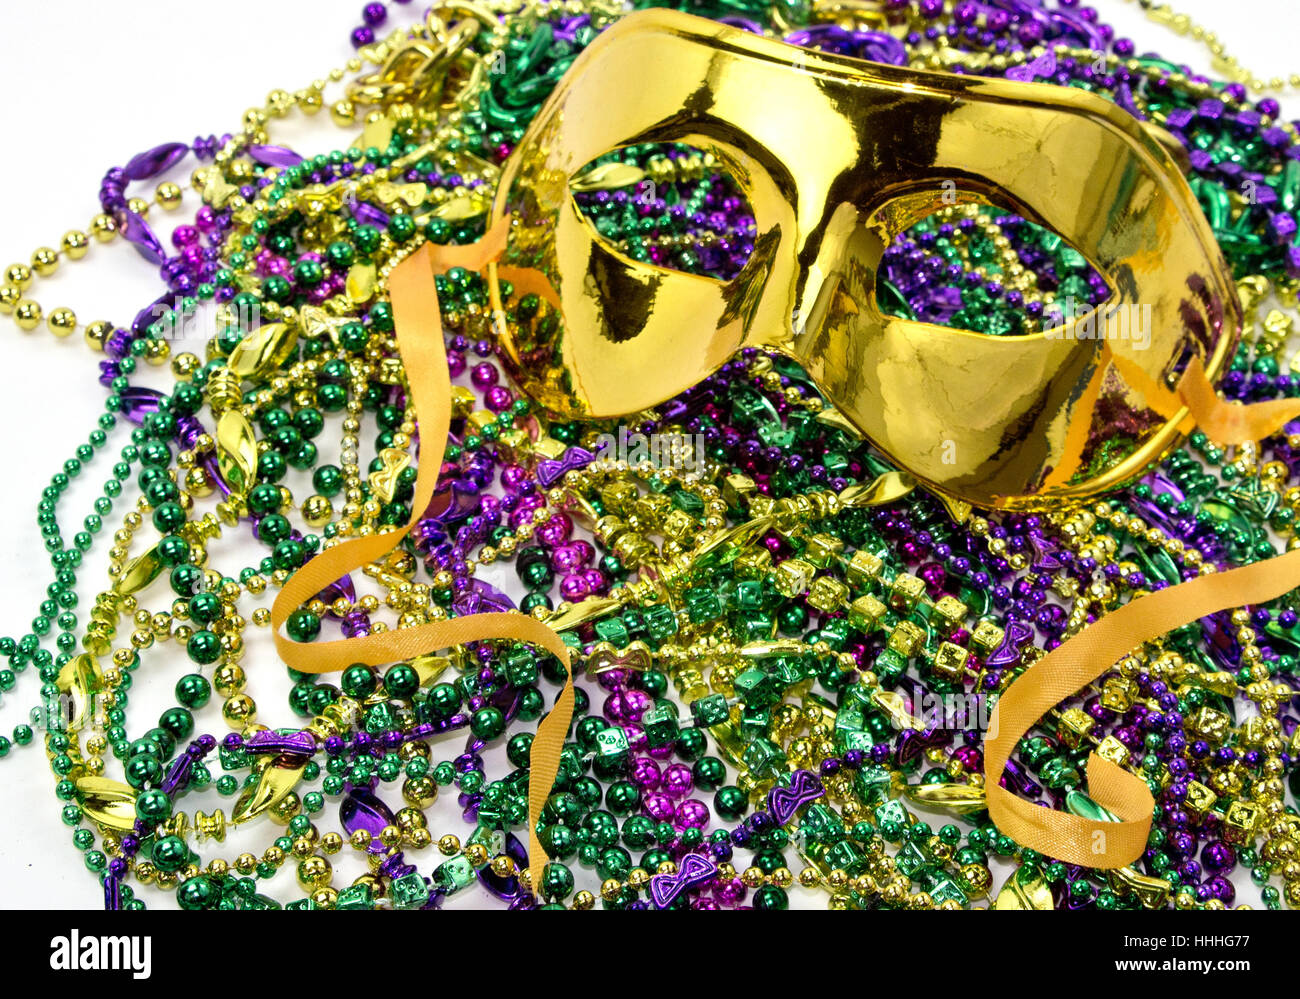 blue, green, celebrate, reveling, revels, celebrates, masks, purple, coins, Stock Photo